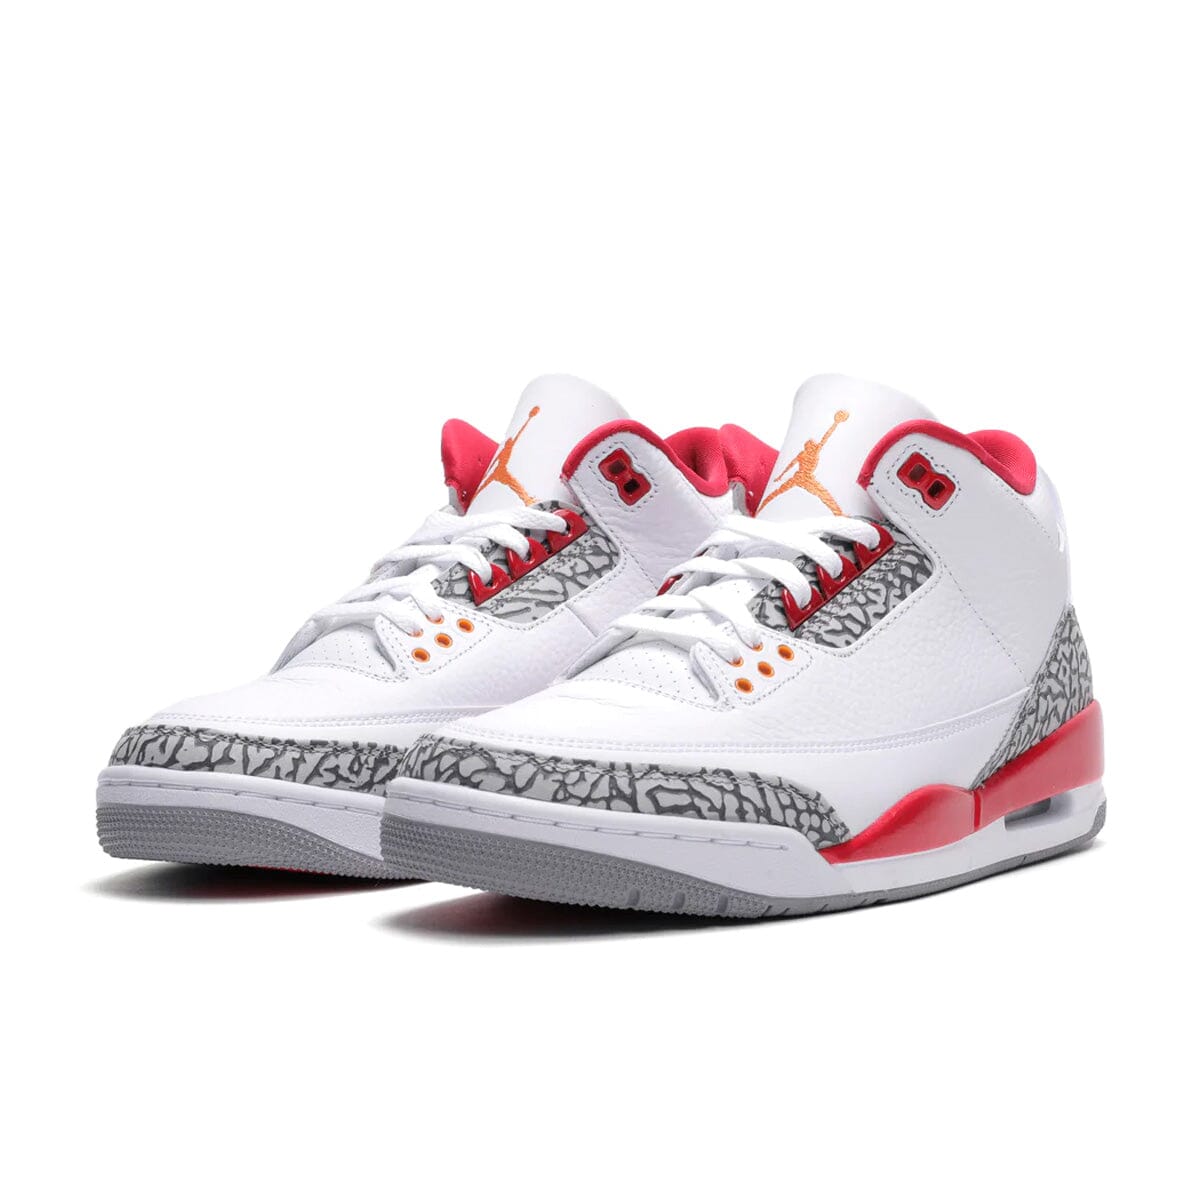 Air Jordan 3 Retro Cardinal Red Air Jordan 3 Blizz Sneakers 